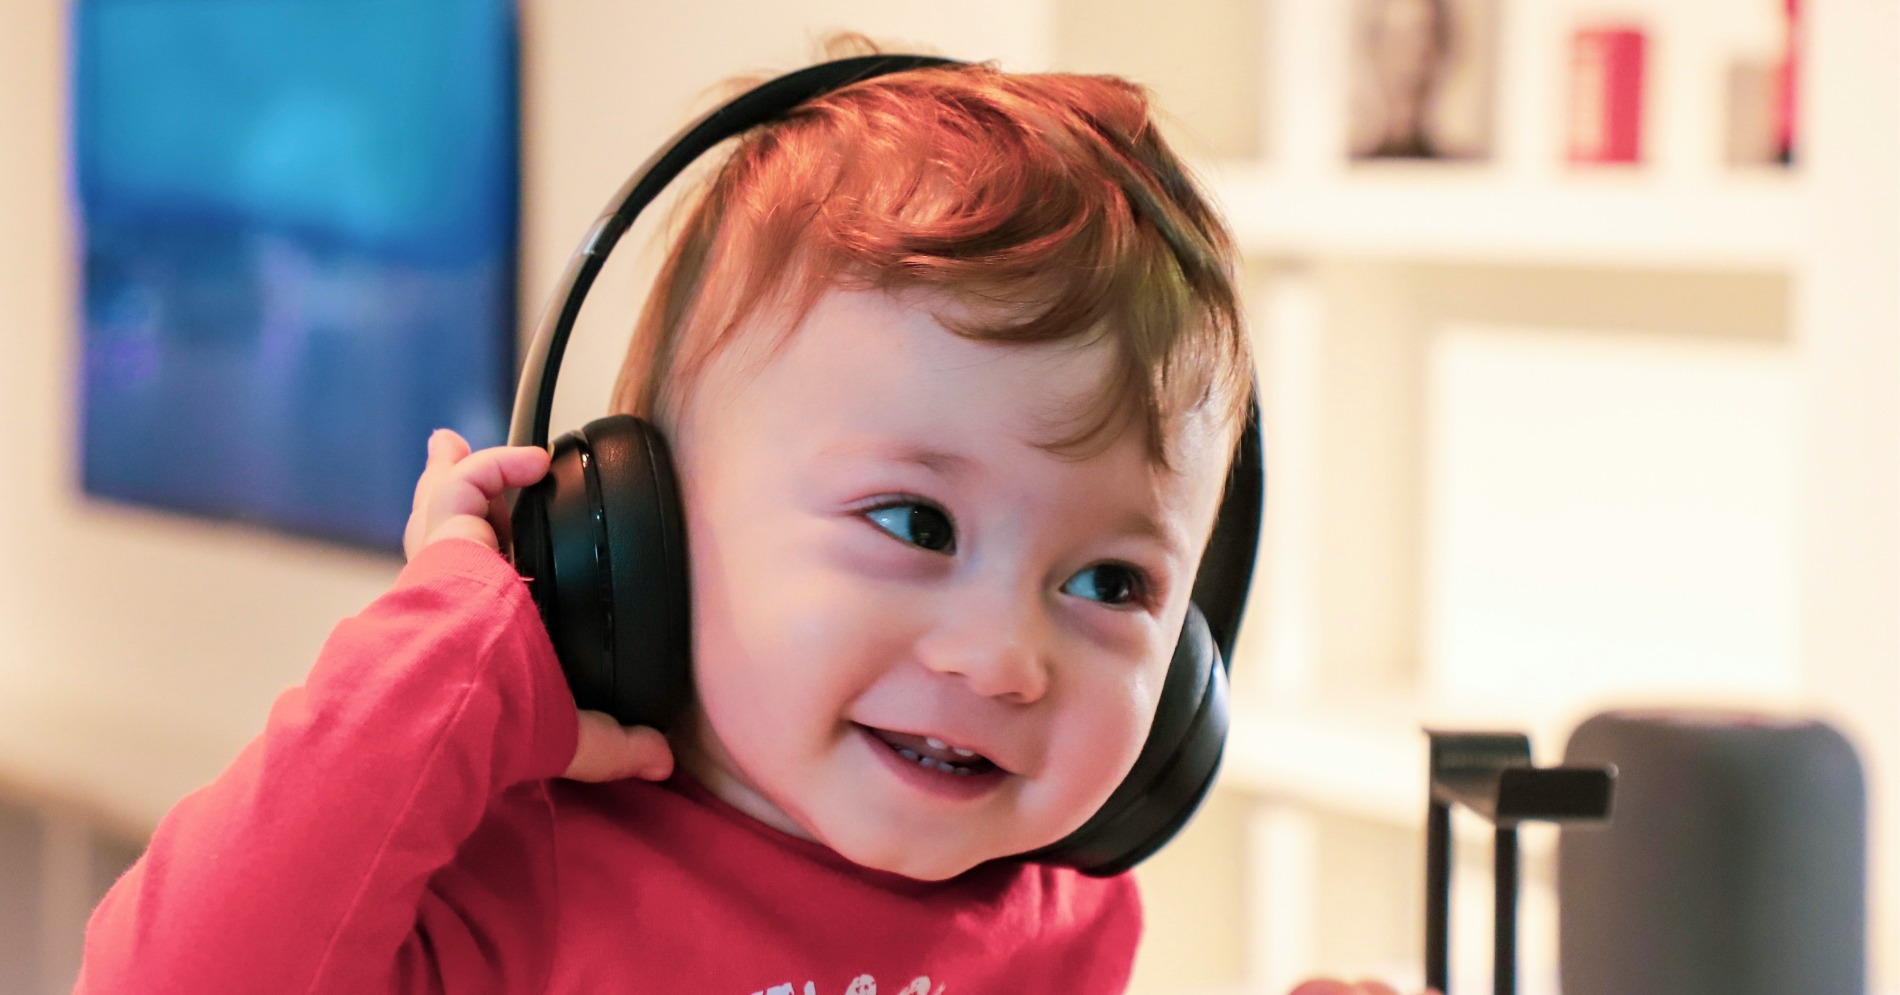 Ilustrasi penggunaan headphone pada anak (Sumber gambar: alireza attari/Unsplash)